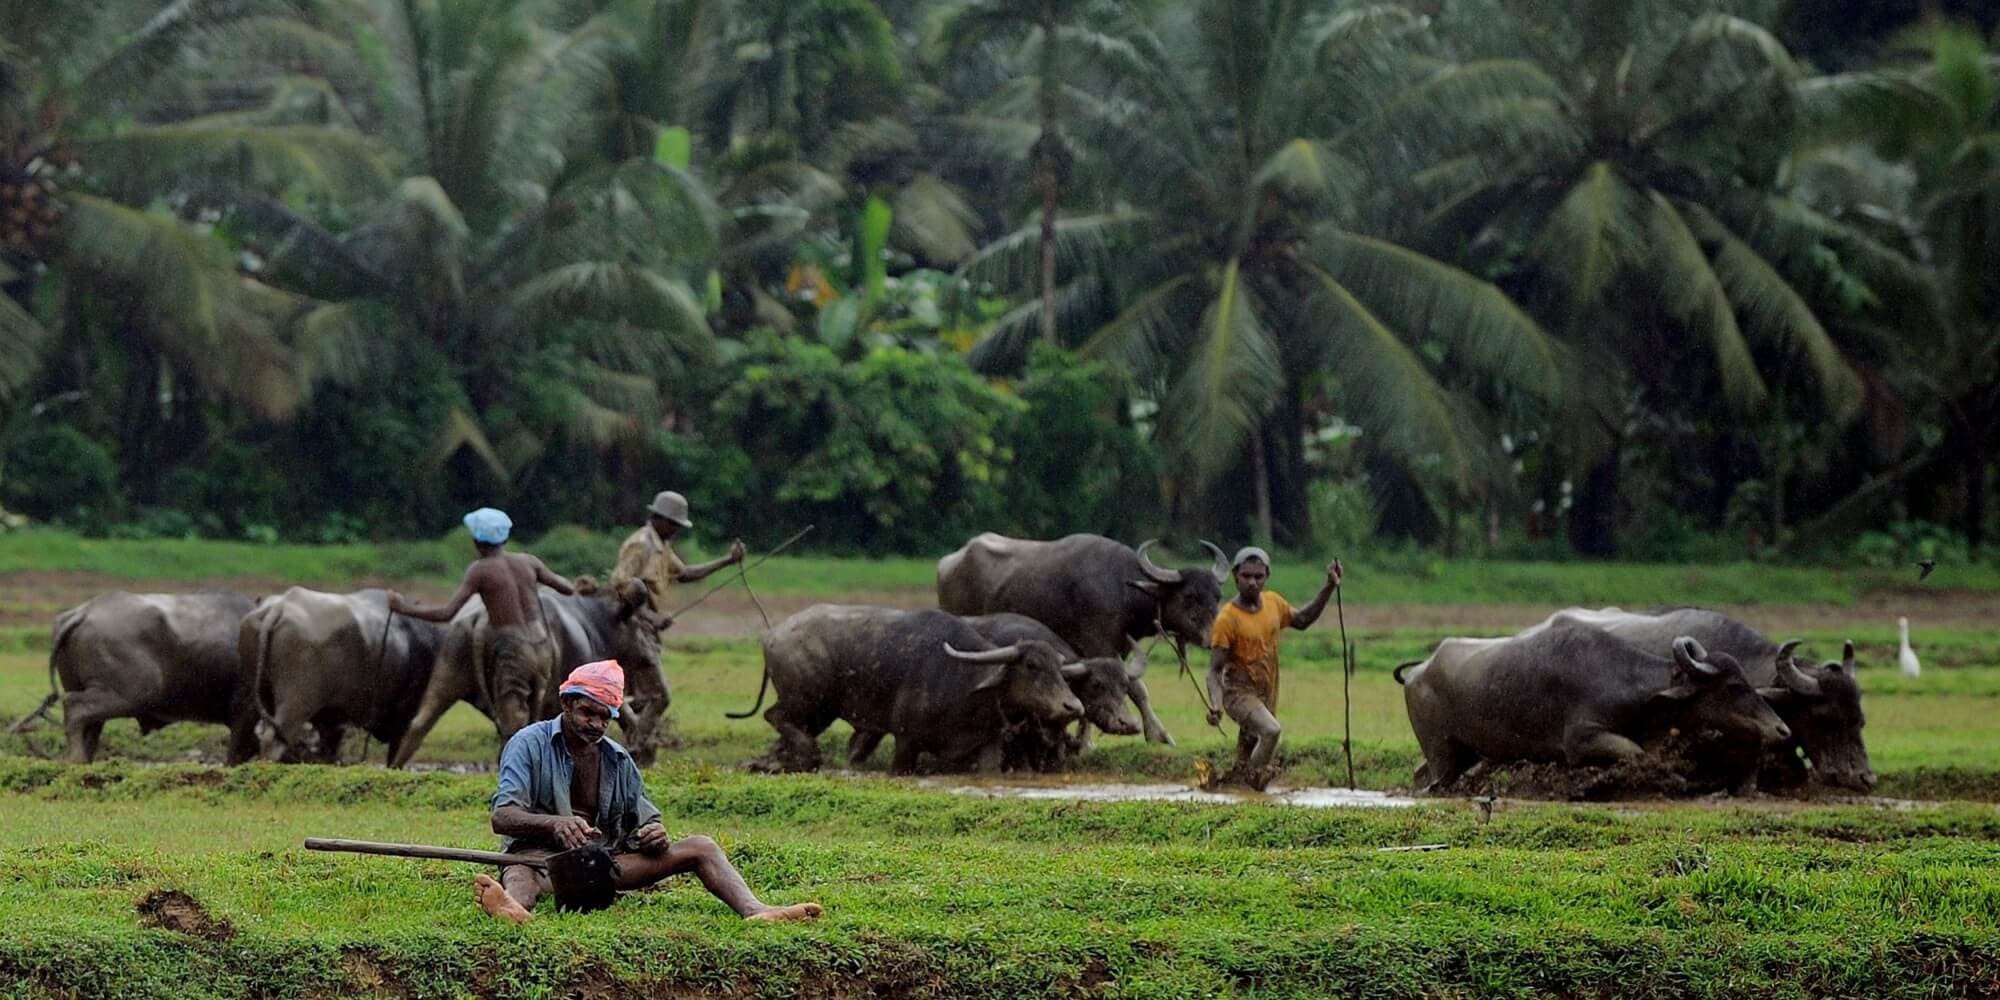 Farmers farming the paddy field with bulls in Bakamuna Sri Lanka